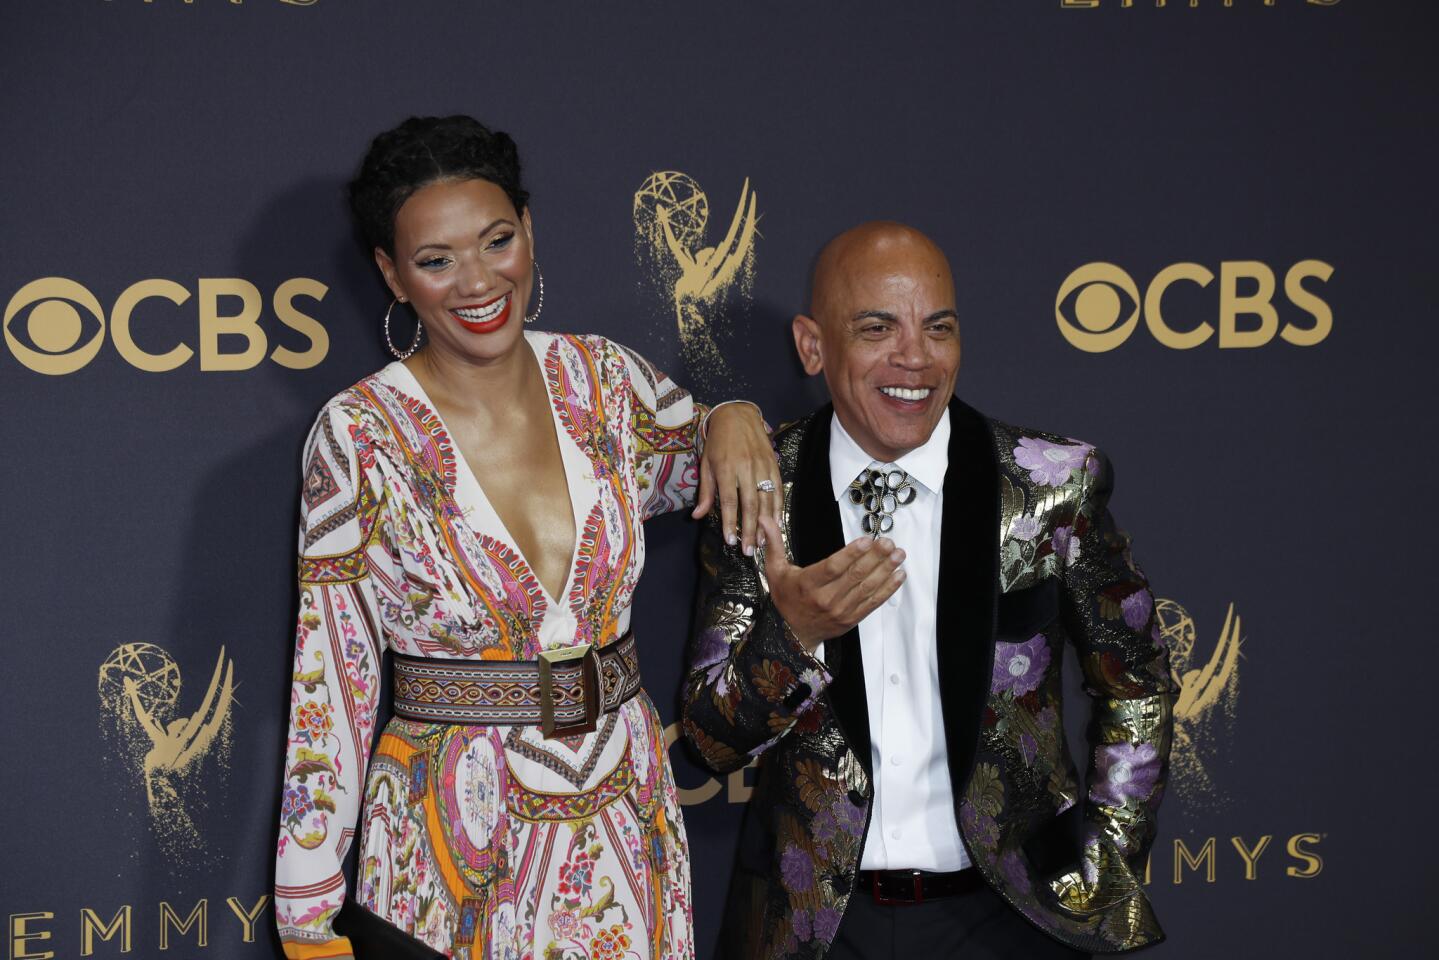 Emmys 2017 arrivals